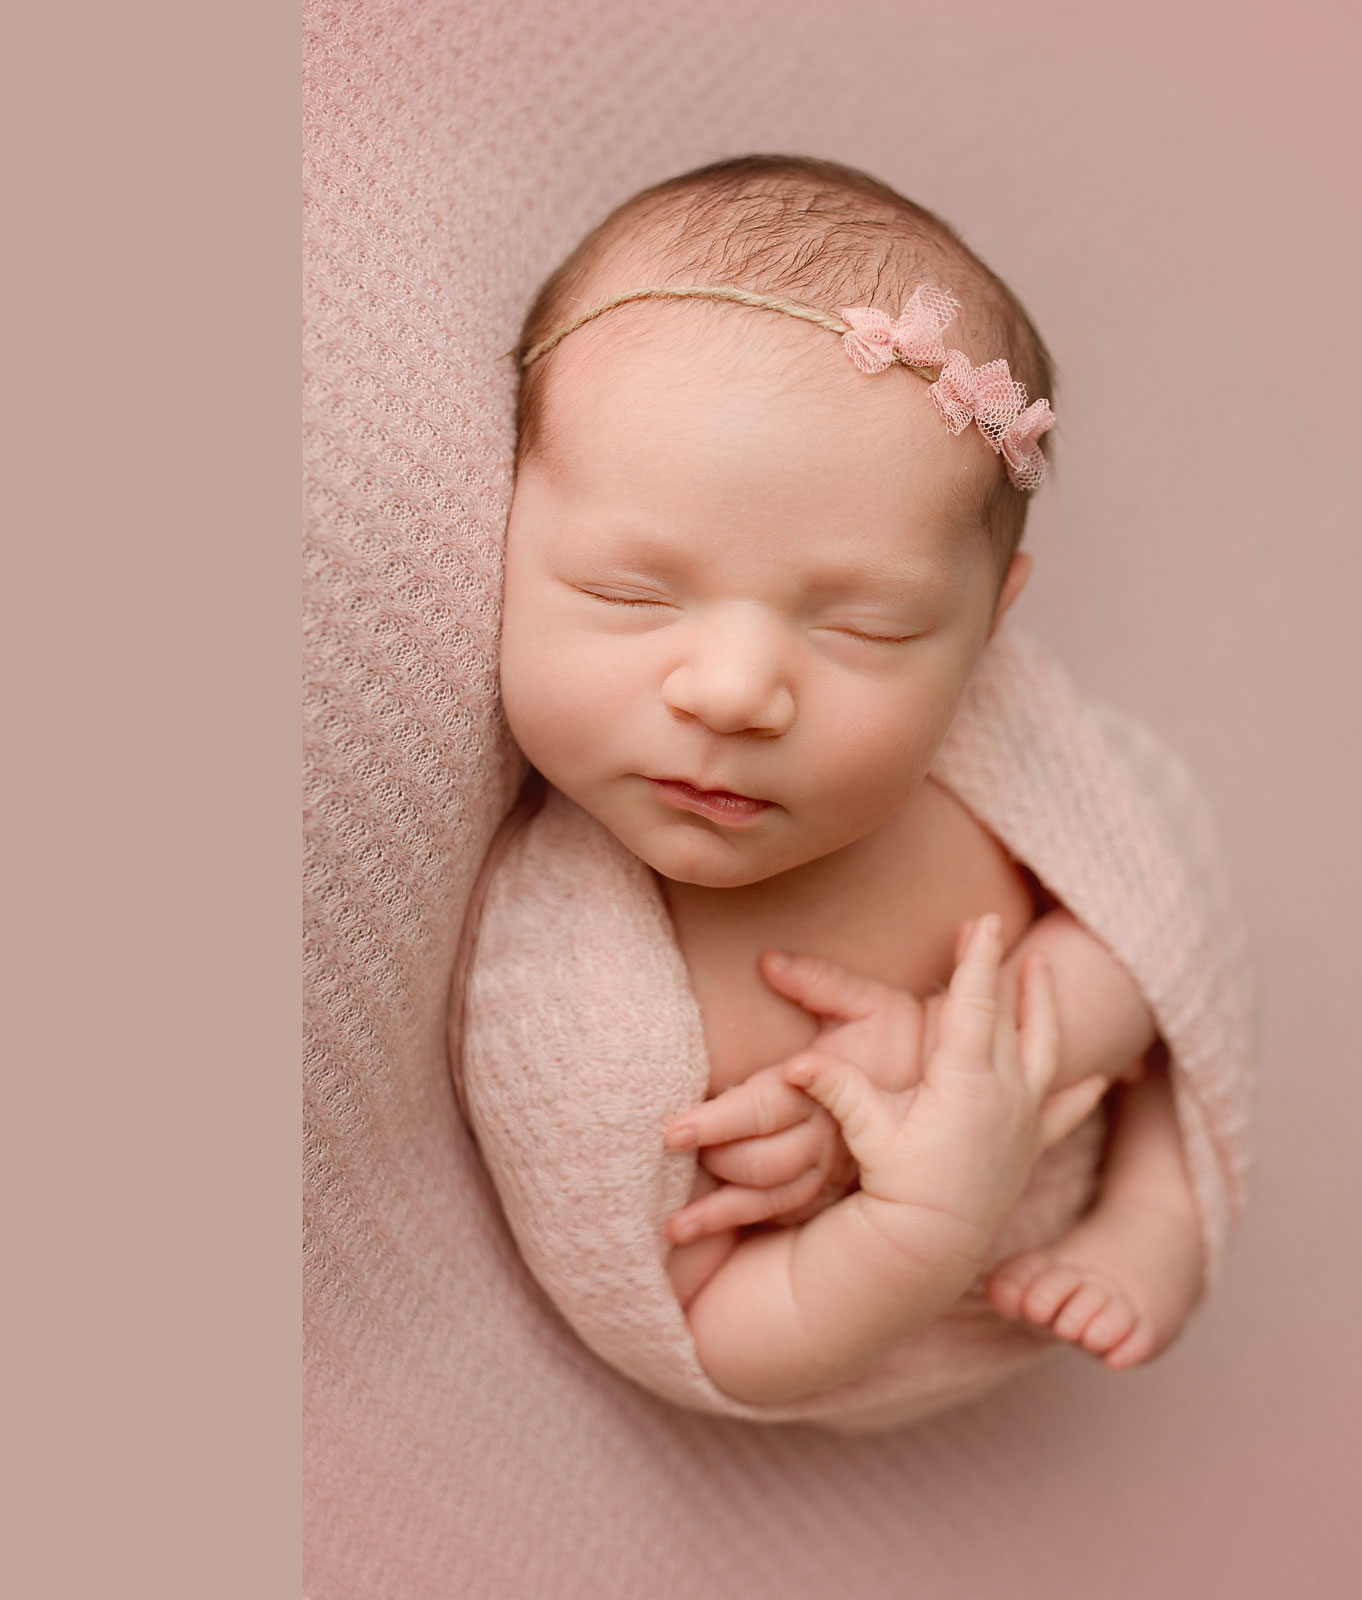 nj newborn photos showing a baby girl